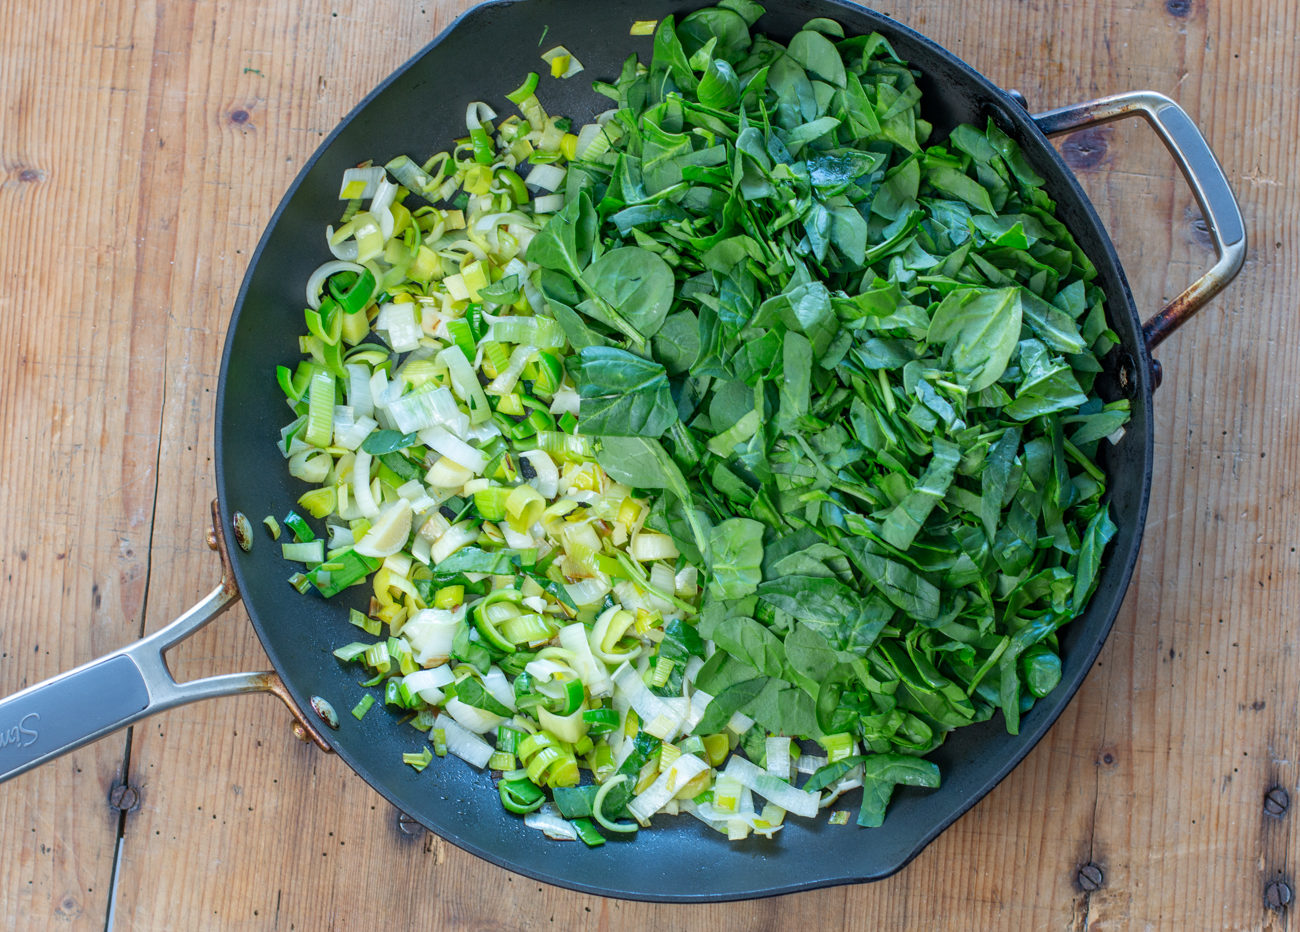 First, sauté leeks & garlic, then add all the spinach